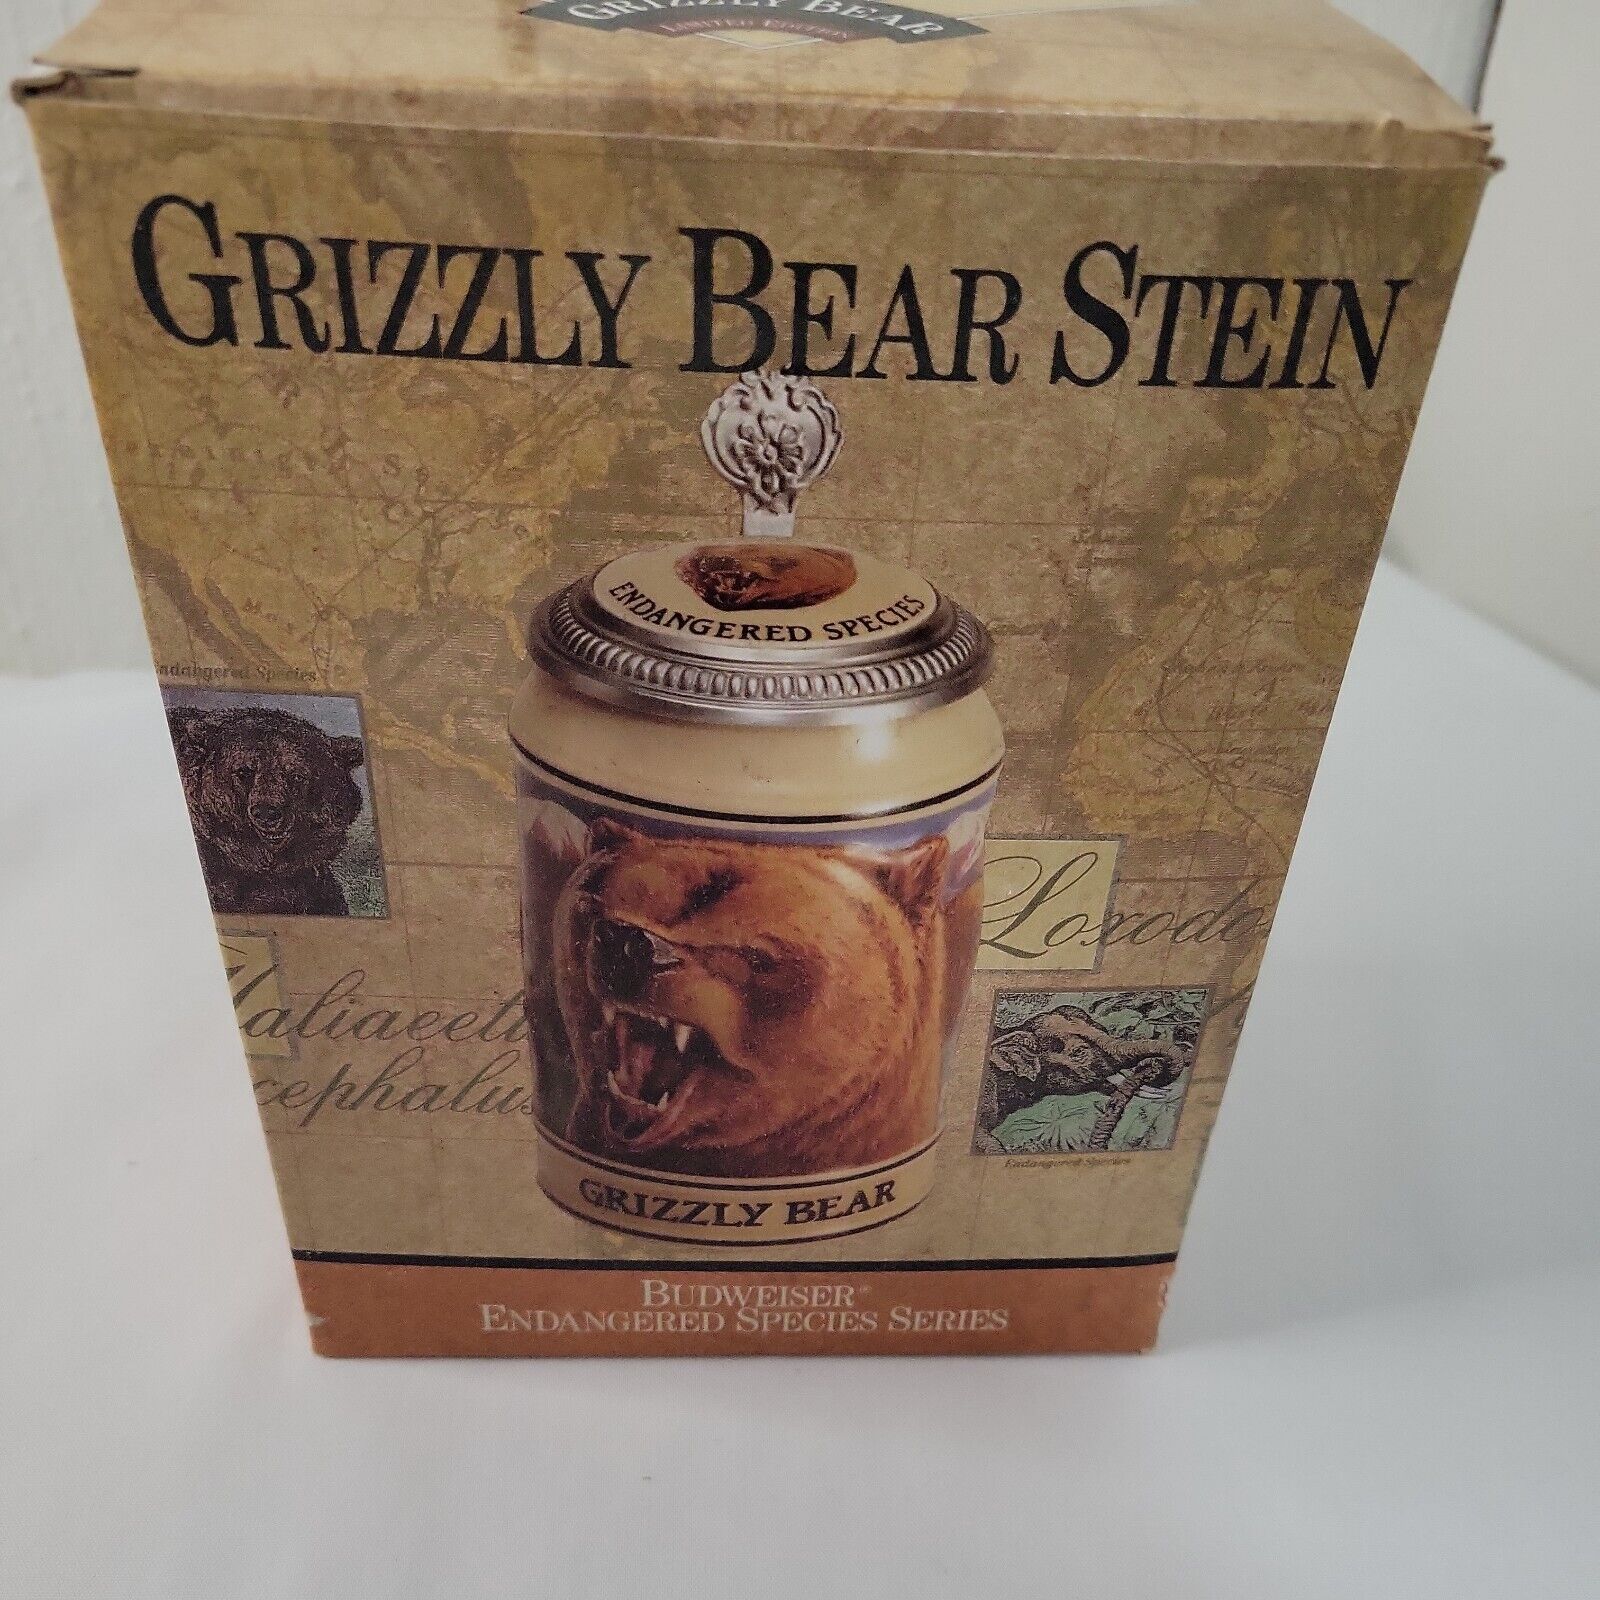 1992 Budweiser Endangered Species Stein Grizzly Bear Anheuser Busch vintage